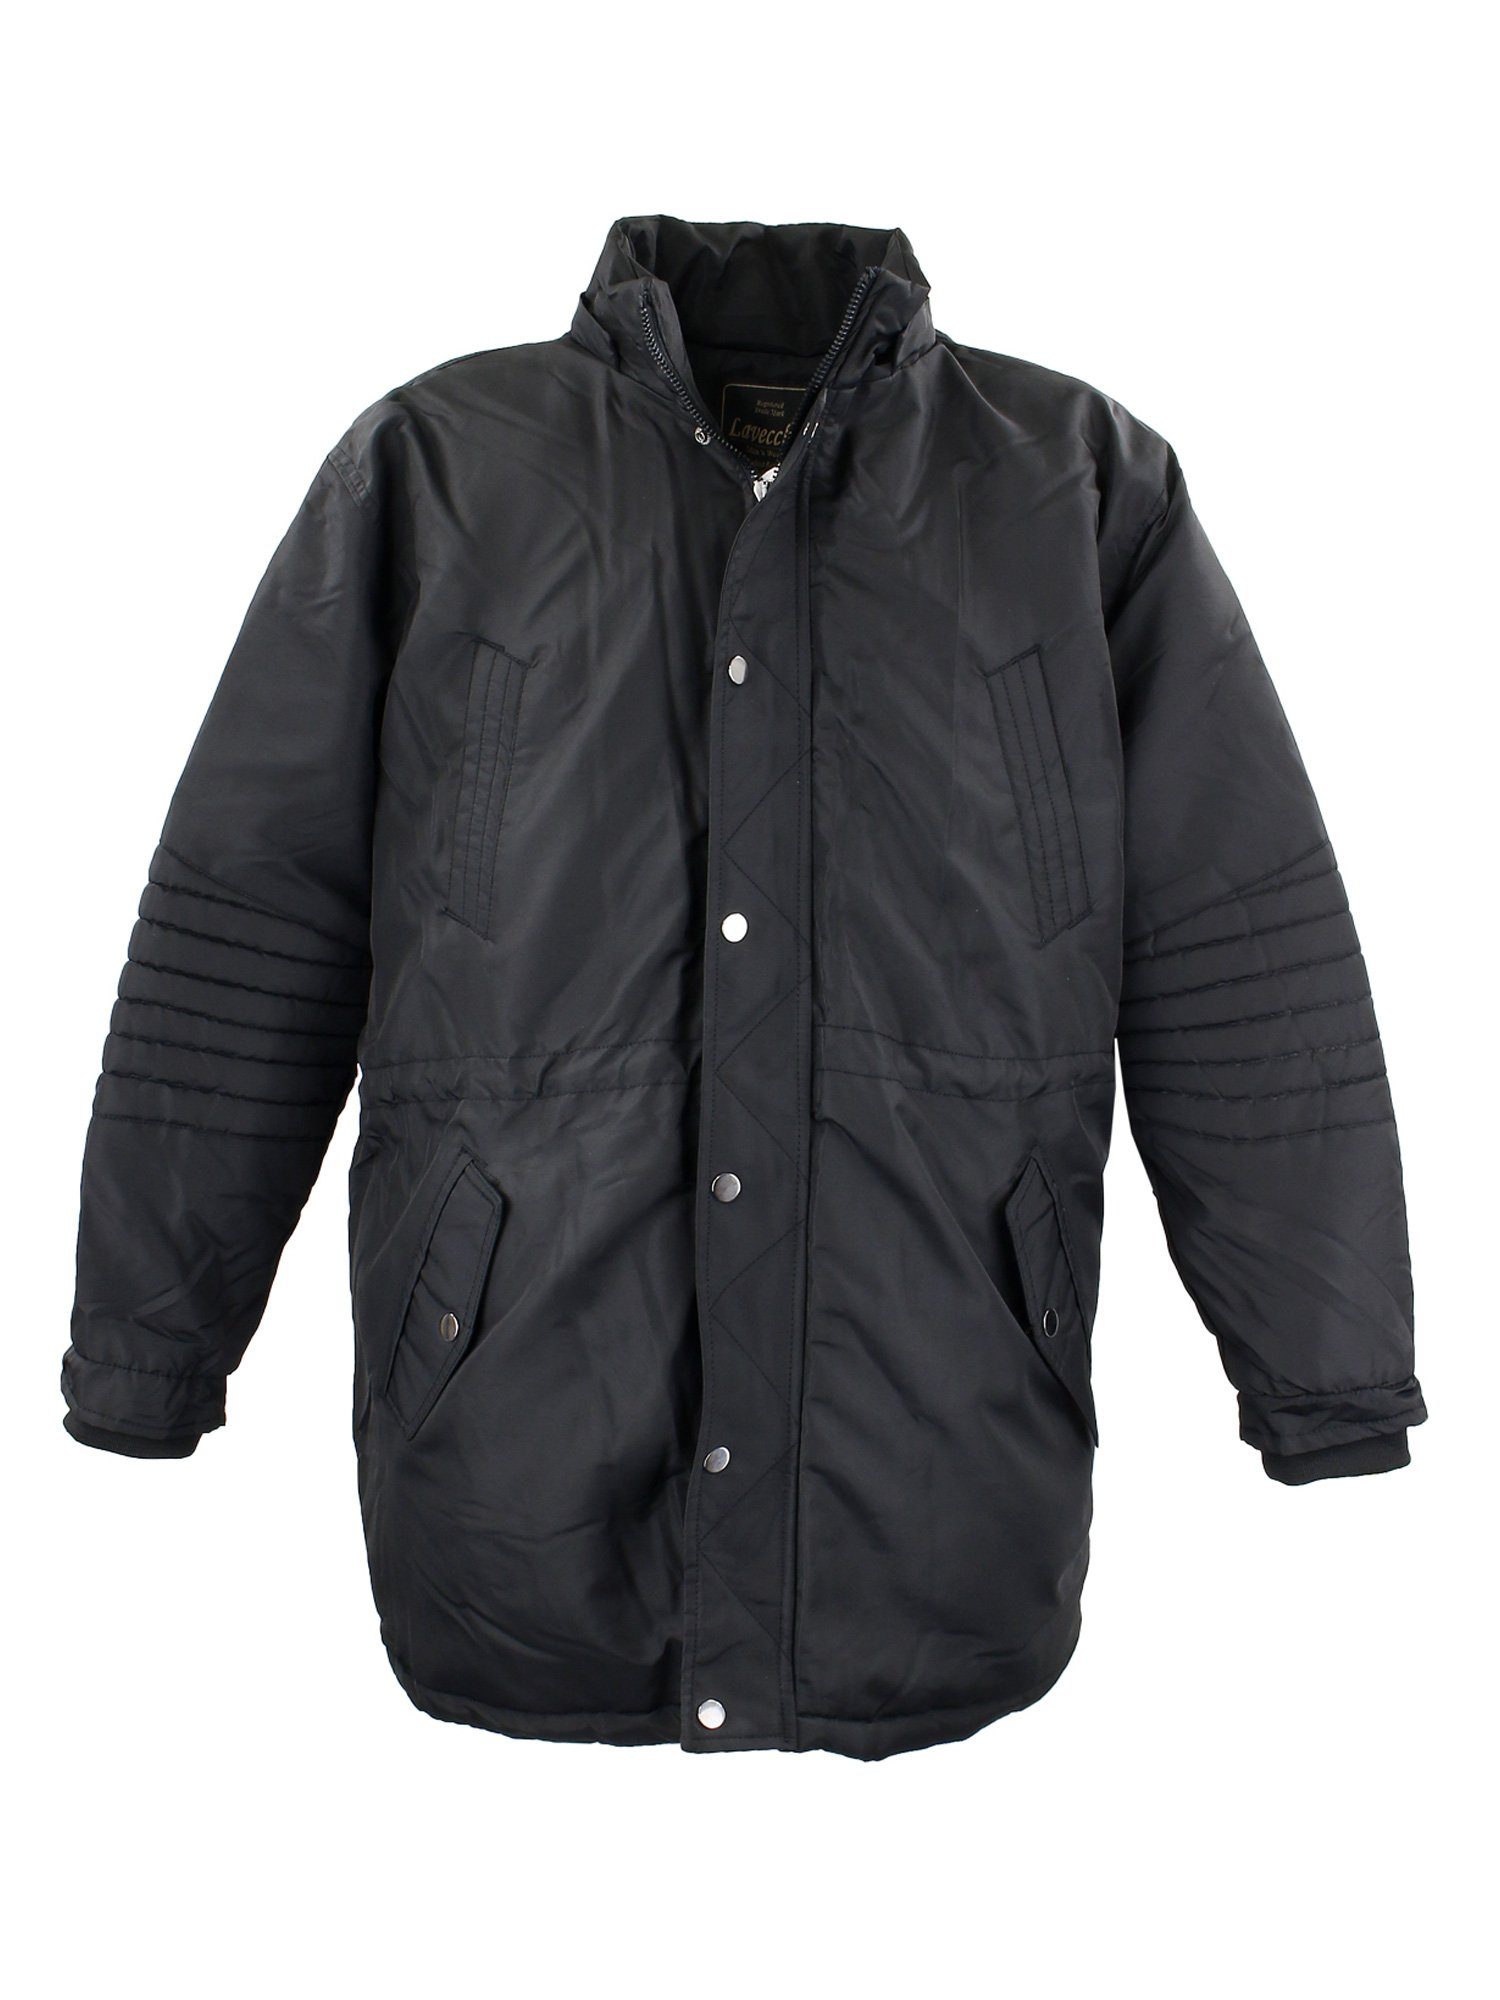 Winterjacke Übergrößen & Lavecchia schwarz LV-700 mit Kapuze abnehmbarer Jacke gefütterterter